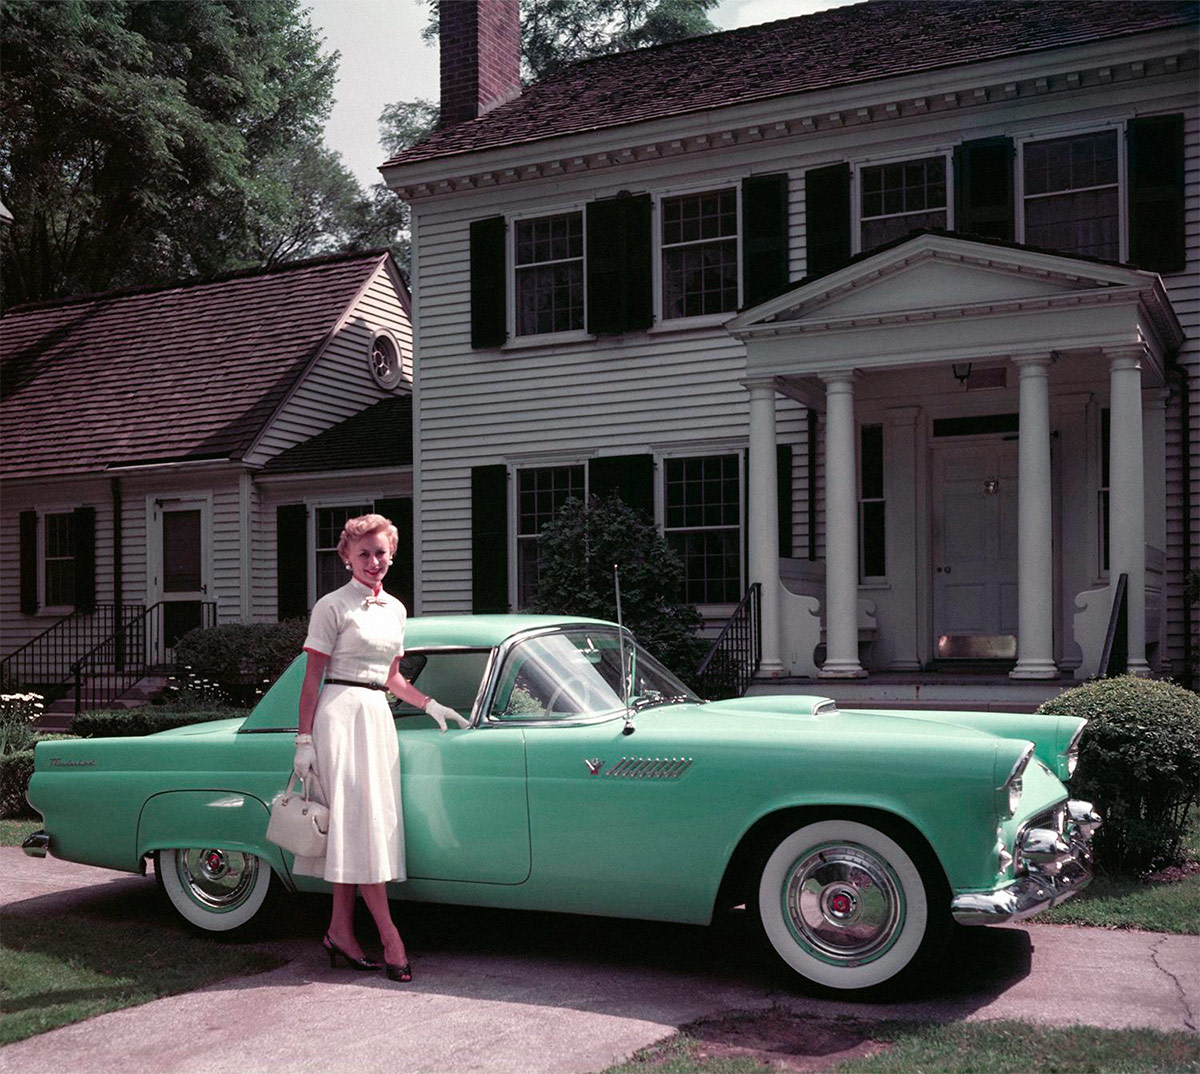 Ford Thunderbird, 1955 год

